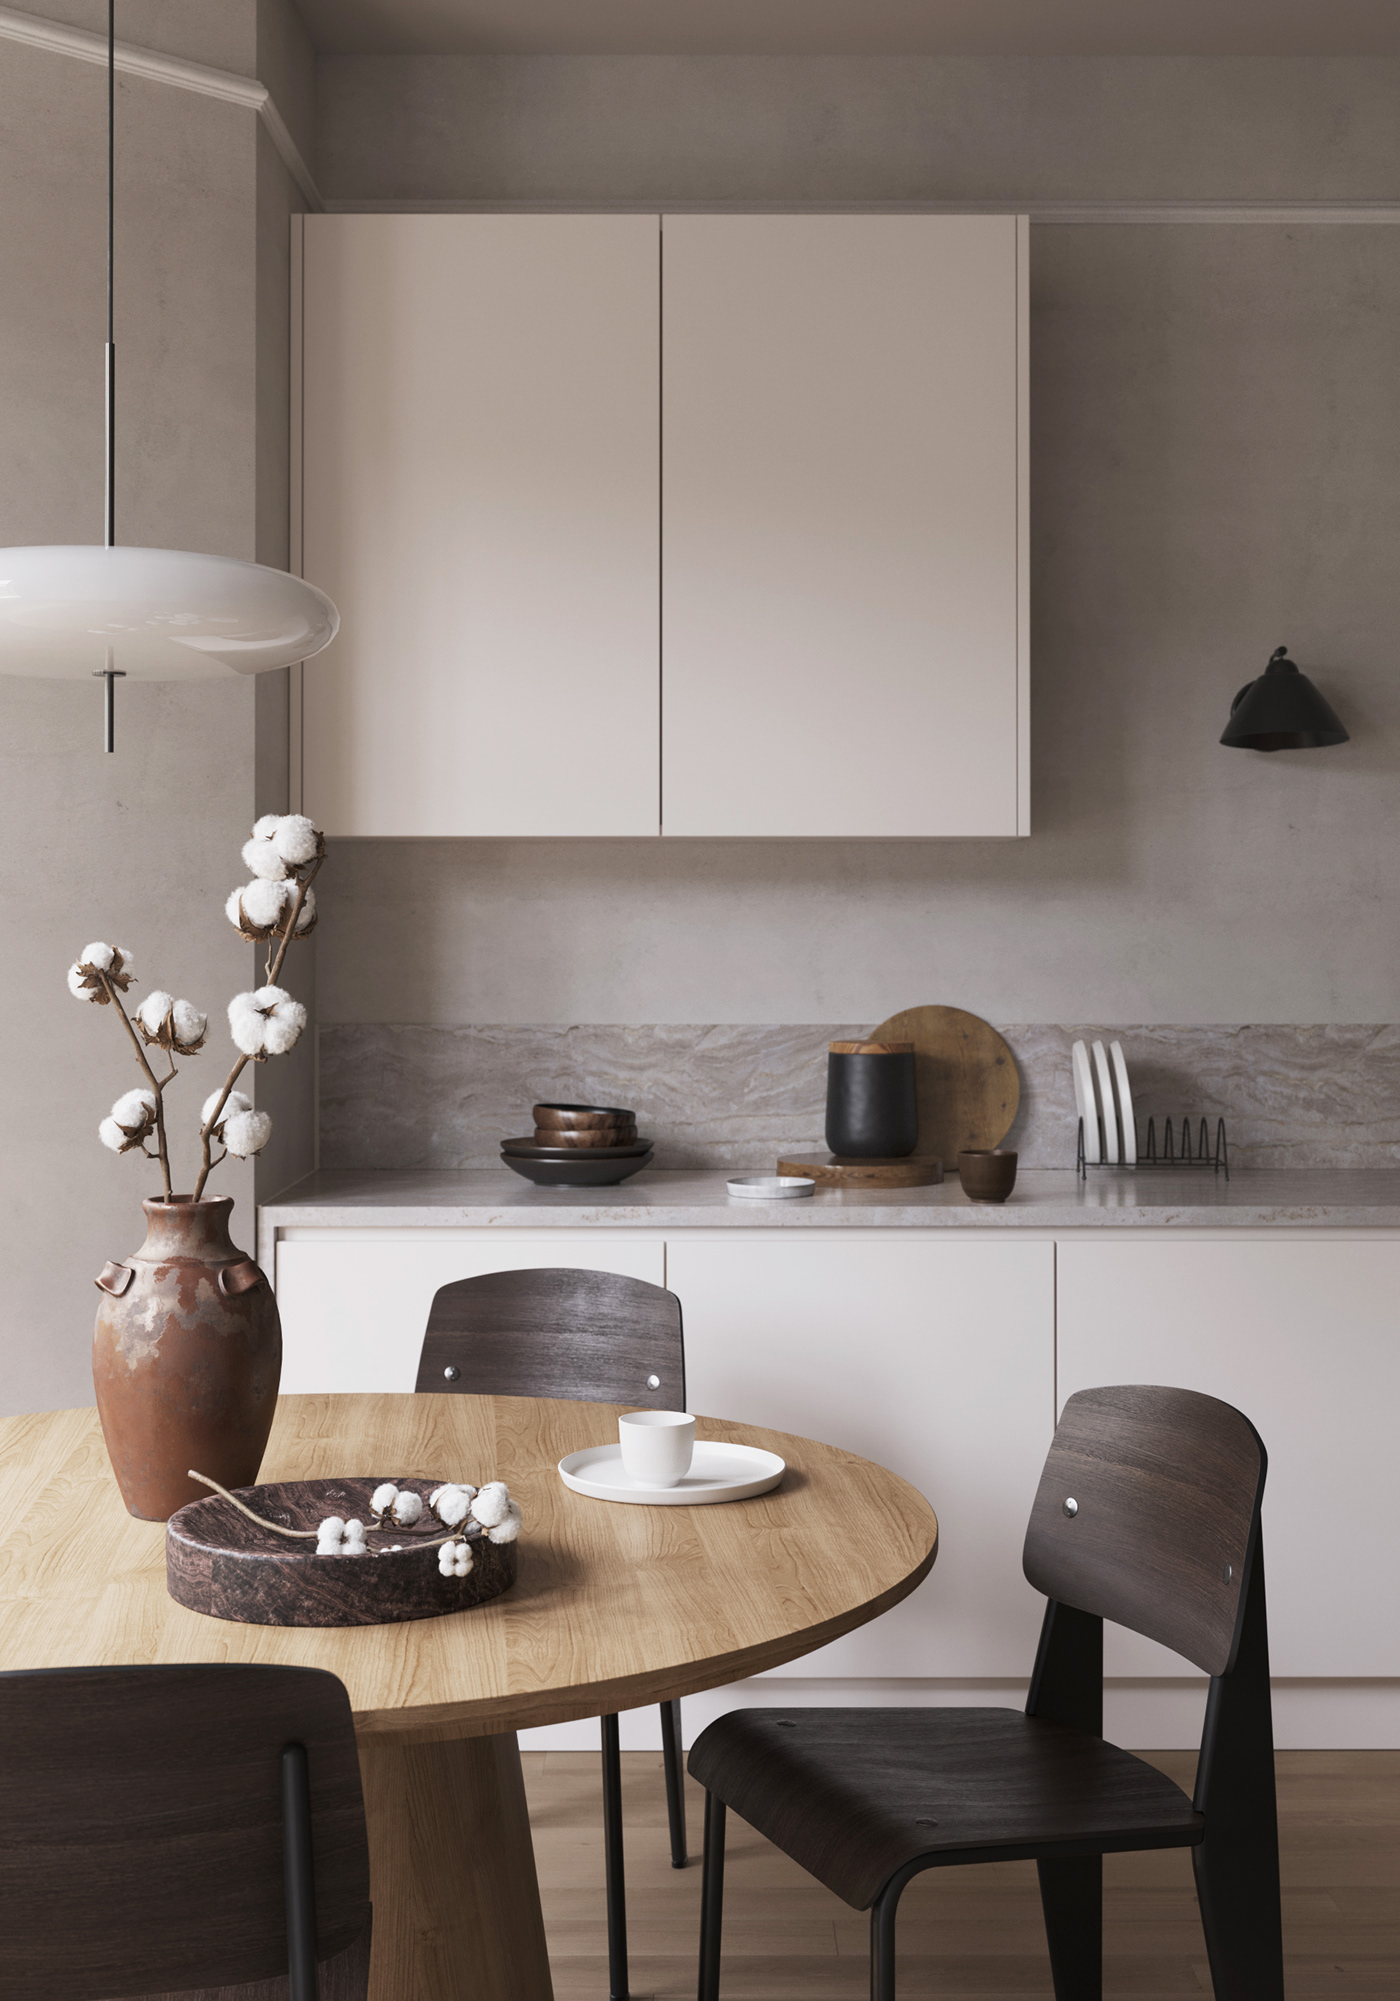 3d max corona render  interior design  kitchen kitchen design